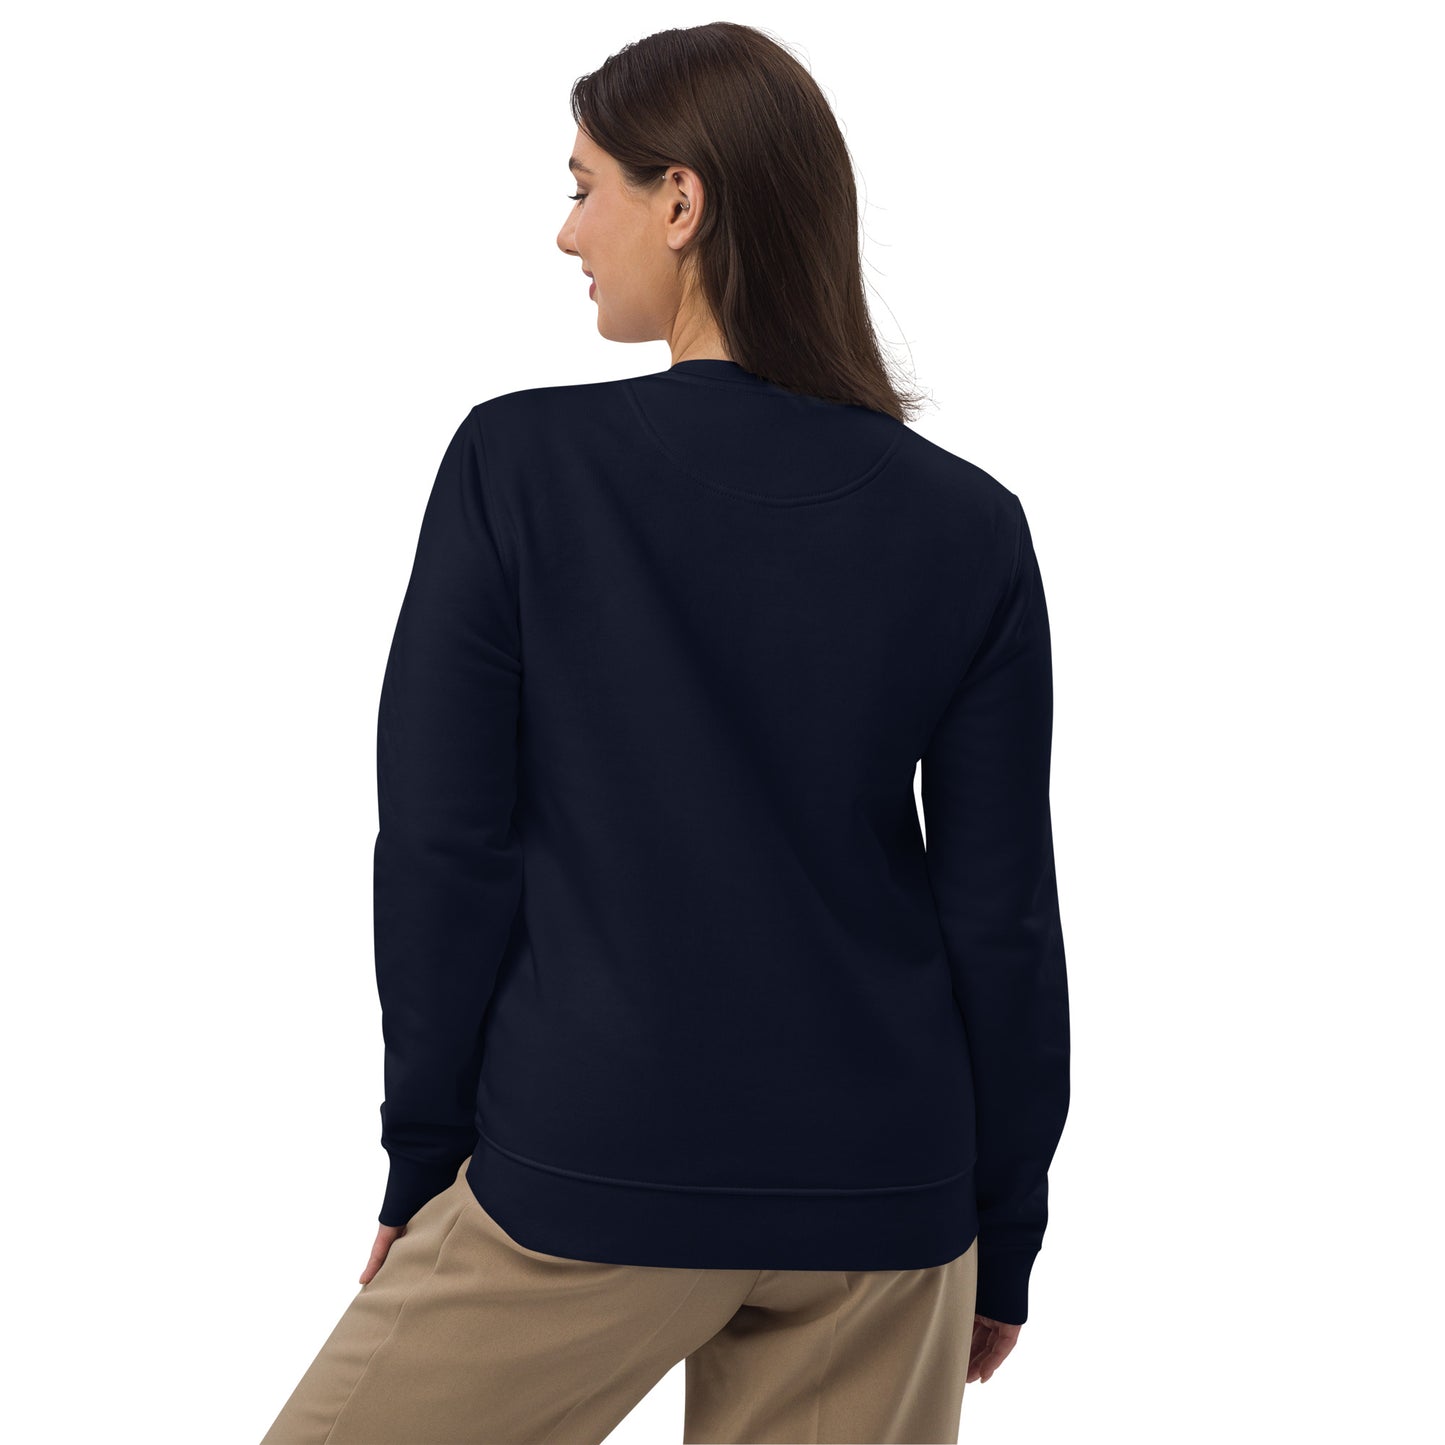 FE031 - Unisex Bio-Pullover - Sweater - Sweatshirt - Free Afghanistan 1